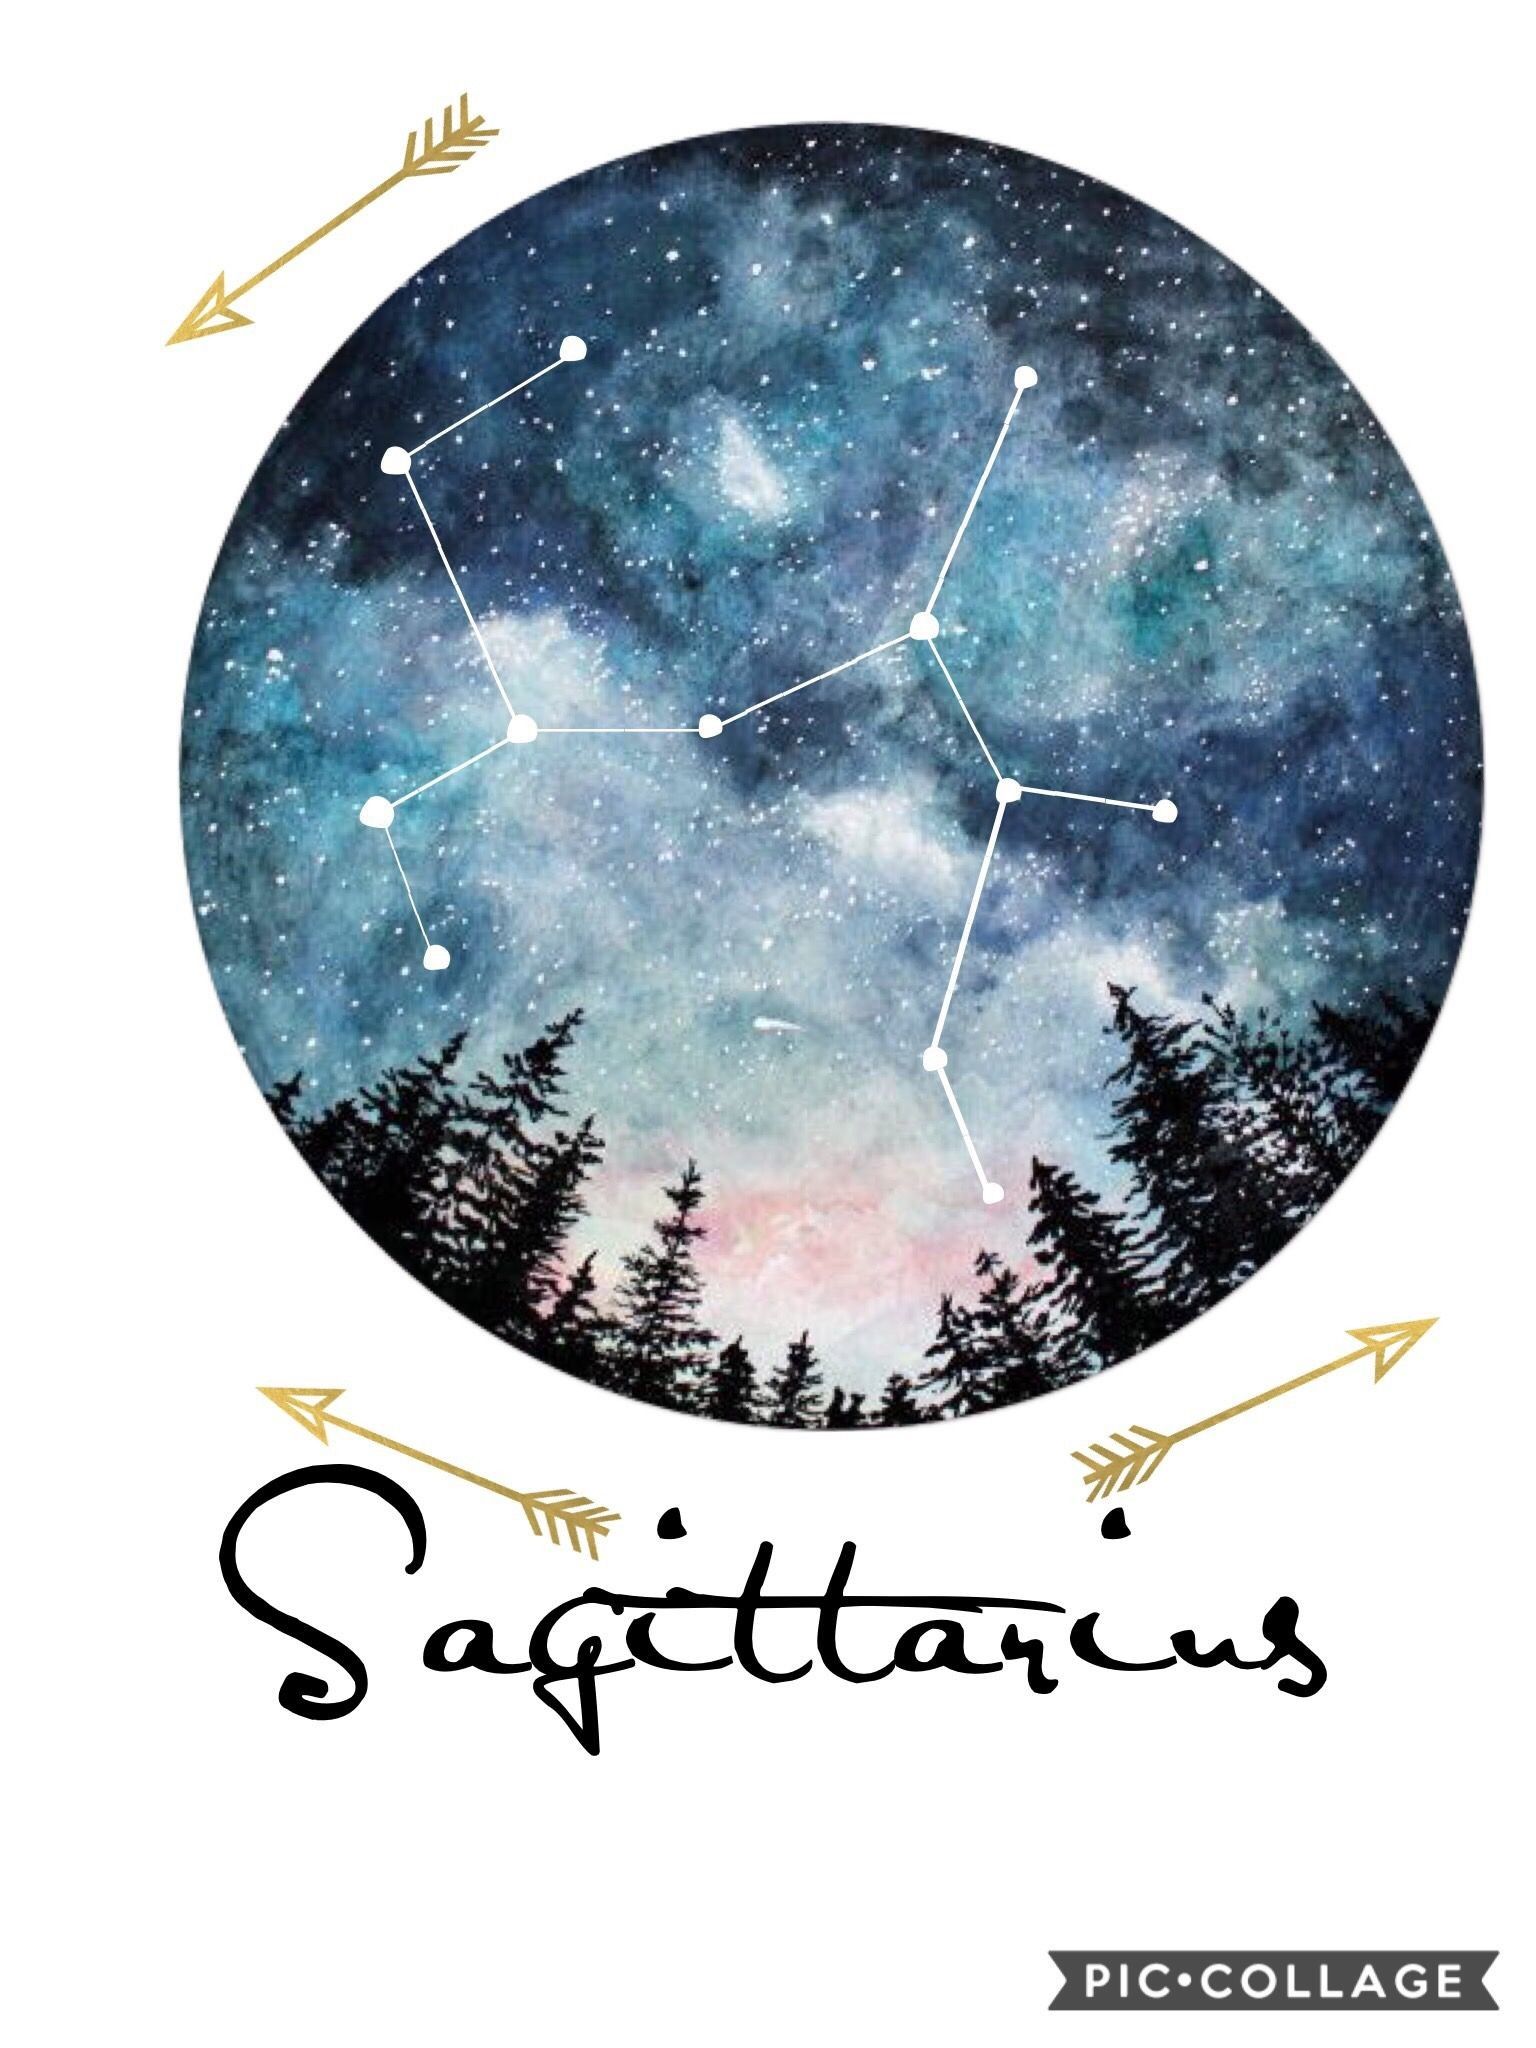 The constellation of sagittarius with a tree and stars - Sagittarius